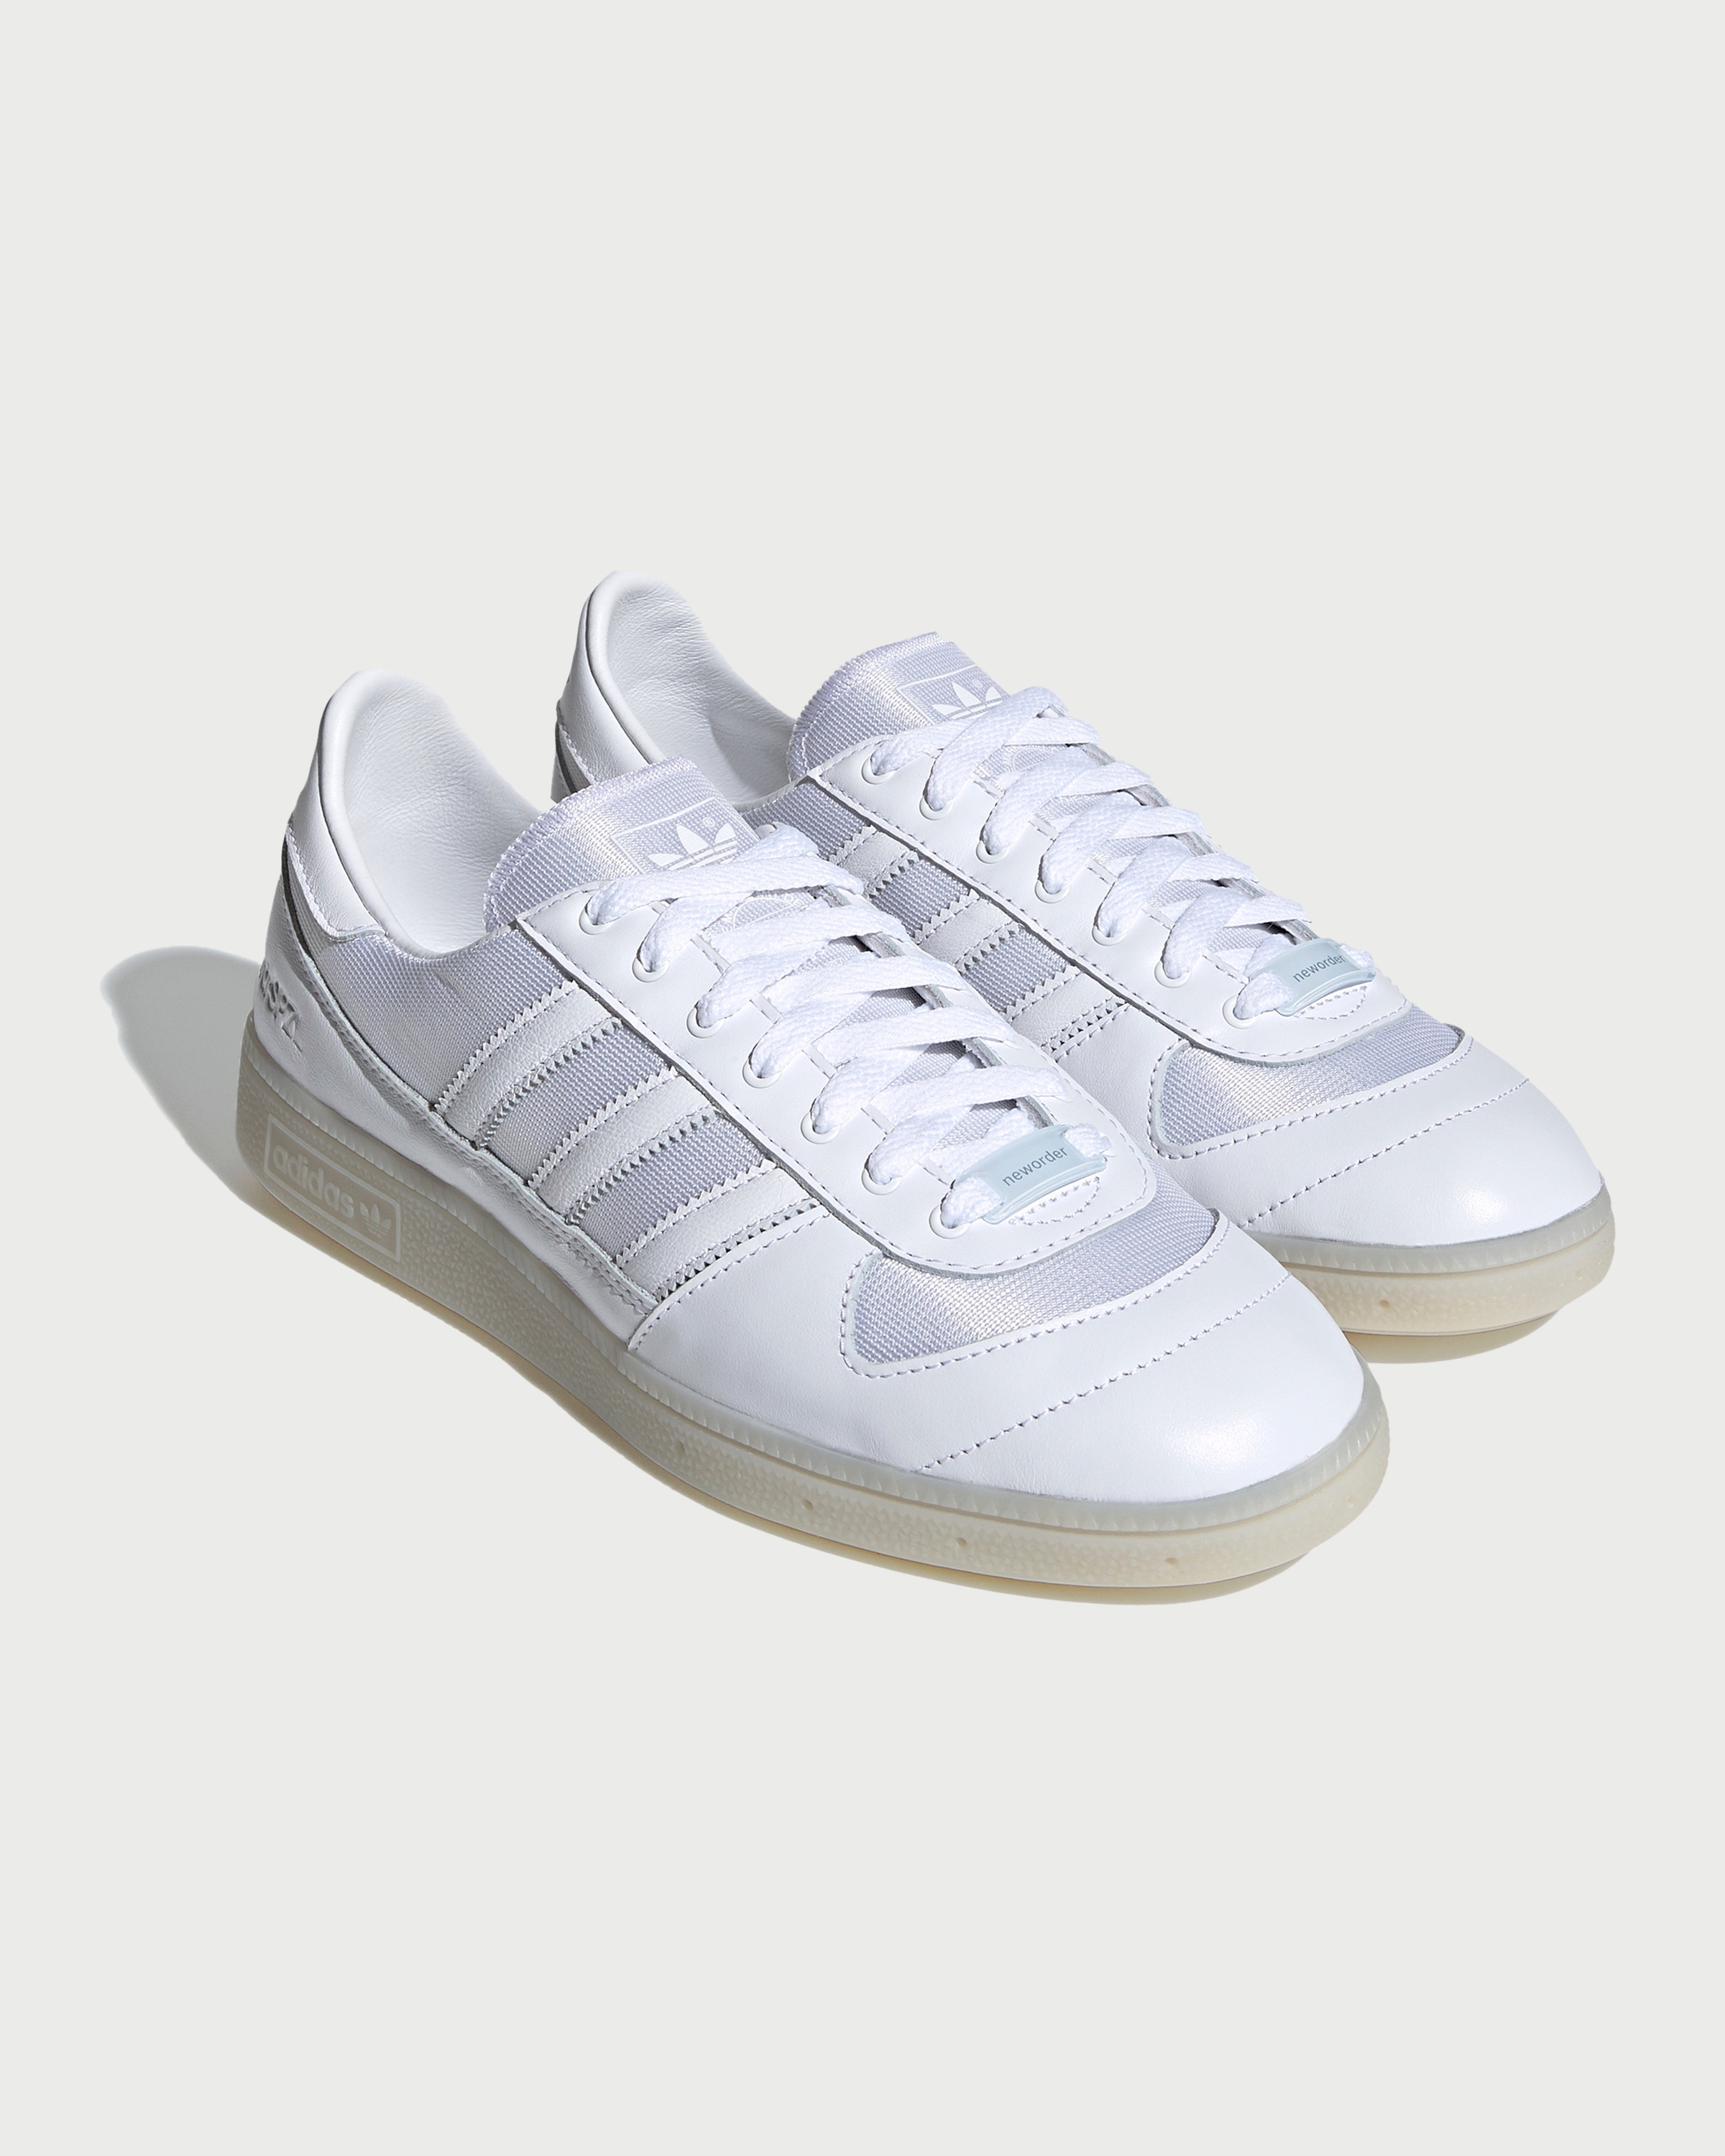 Adidas – Wilsy Spezial x New Order White - Low Top Sneakers - White - Image 2